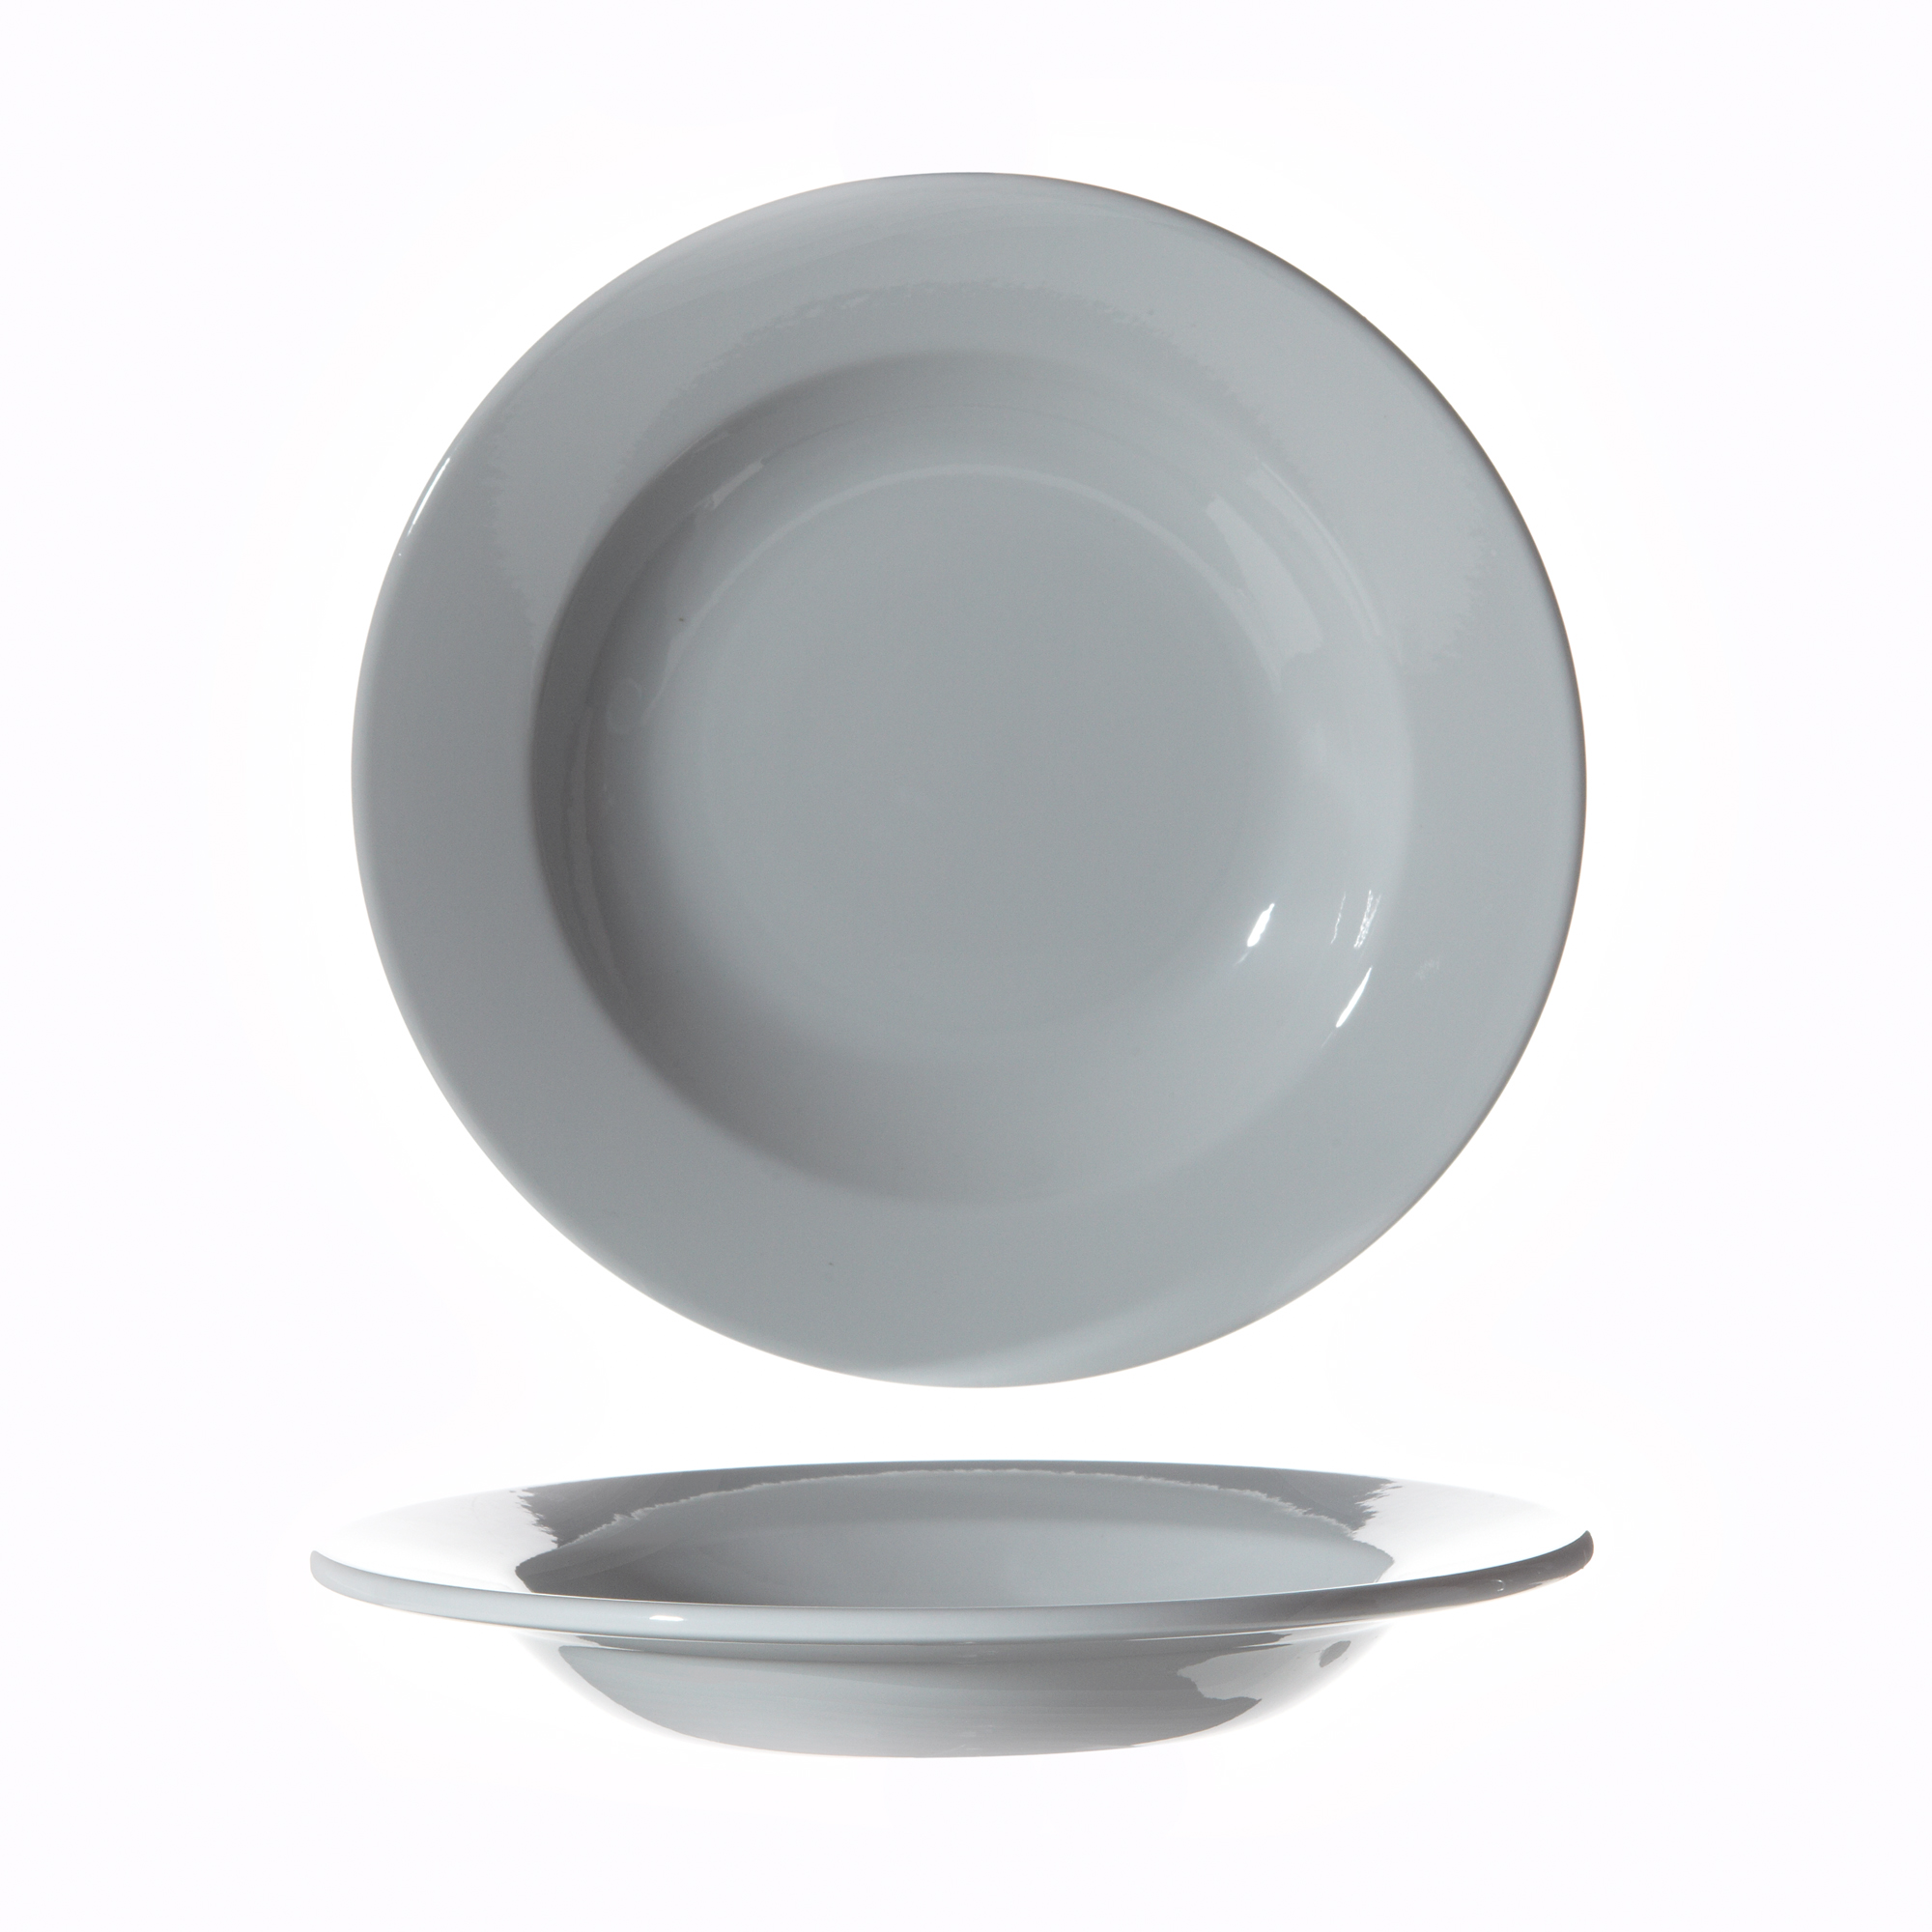 Assiette creuse Bourrelet n°3 en porcelaine diam 228 mm - Réf. 591004 - Illustration n°1